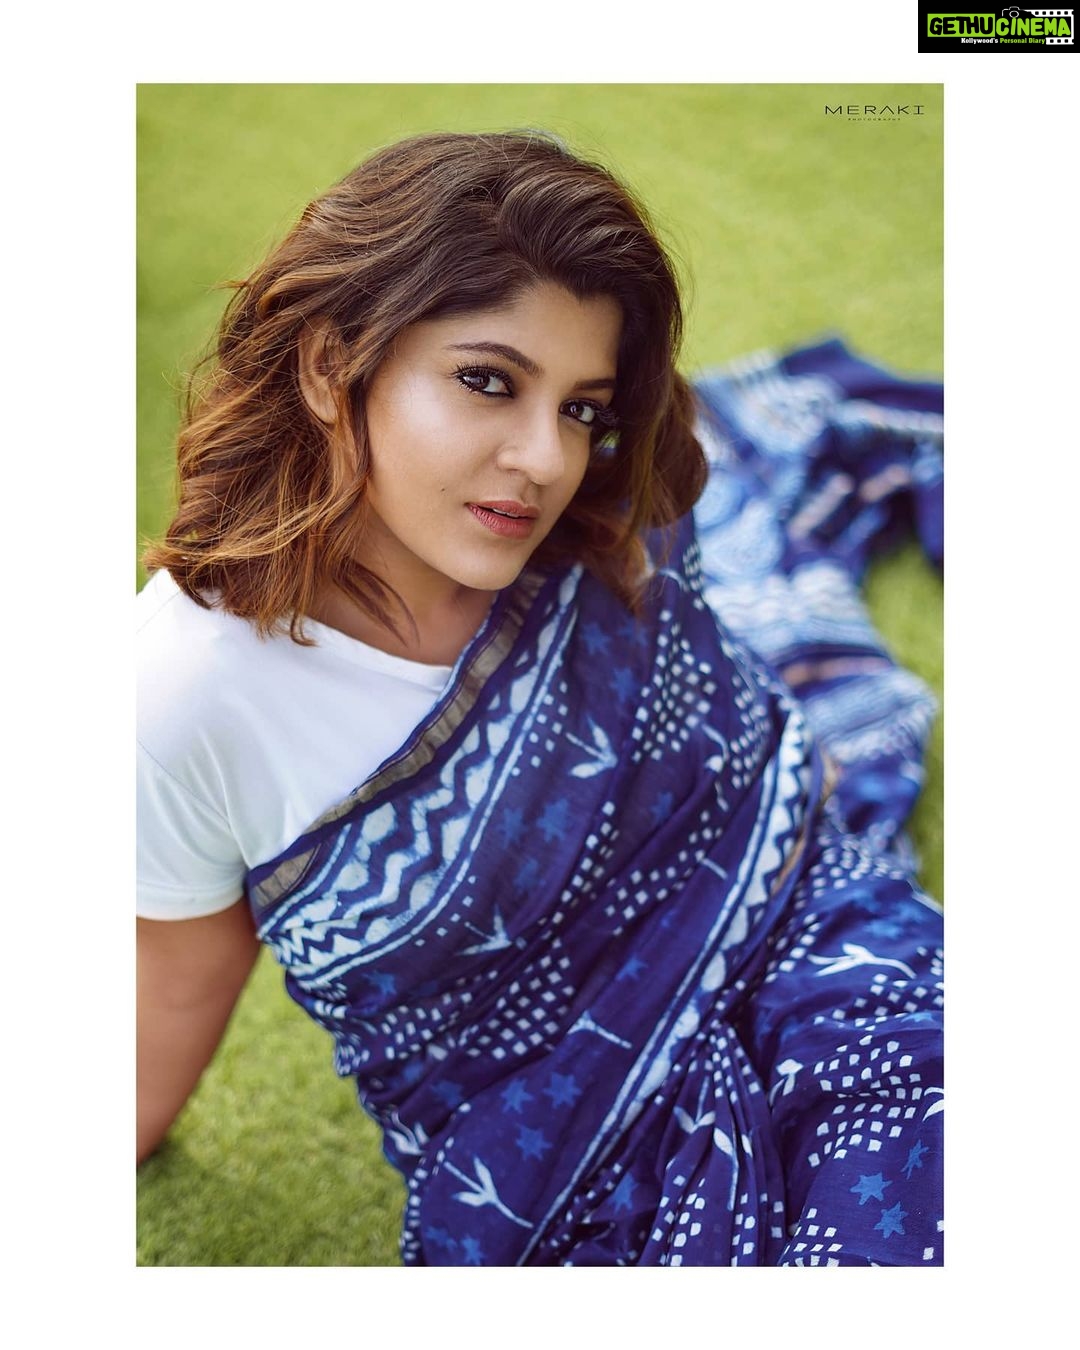 Aparna Balamurali - 167K Likes - Most Liked Instagram Photos